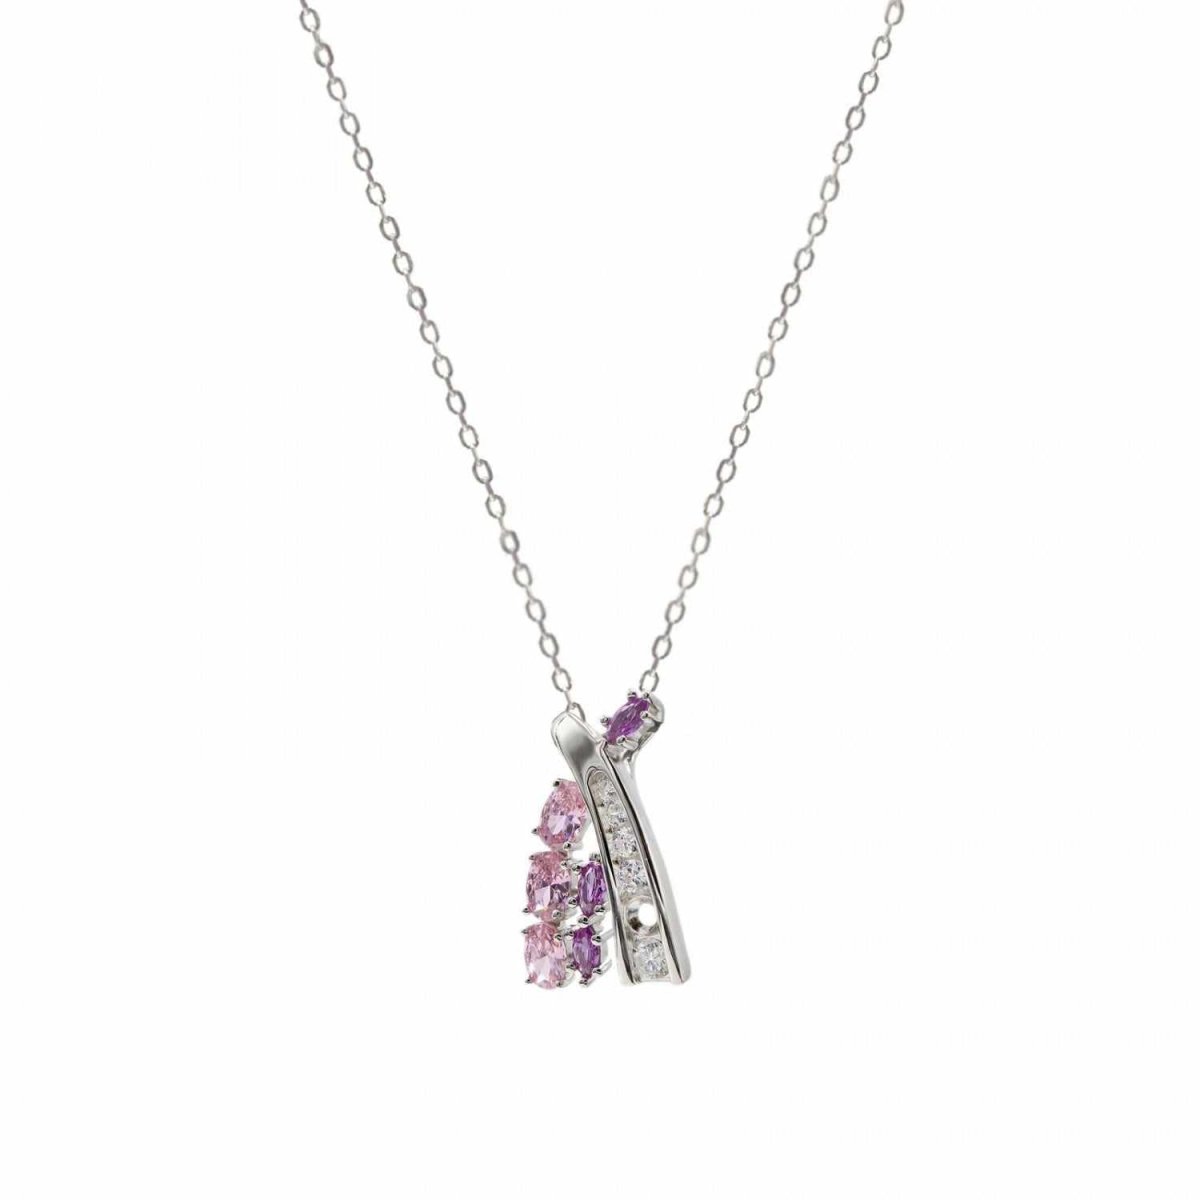 Necklace - Necklaces with stones in silver rose quartz cross design